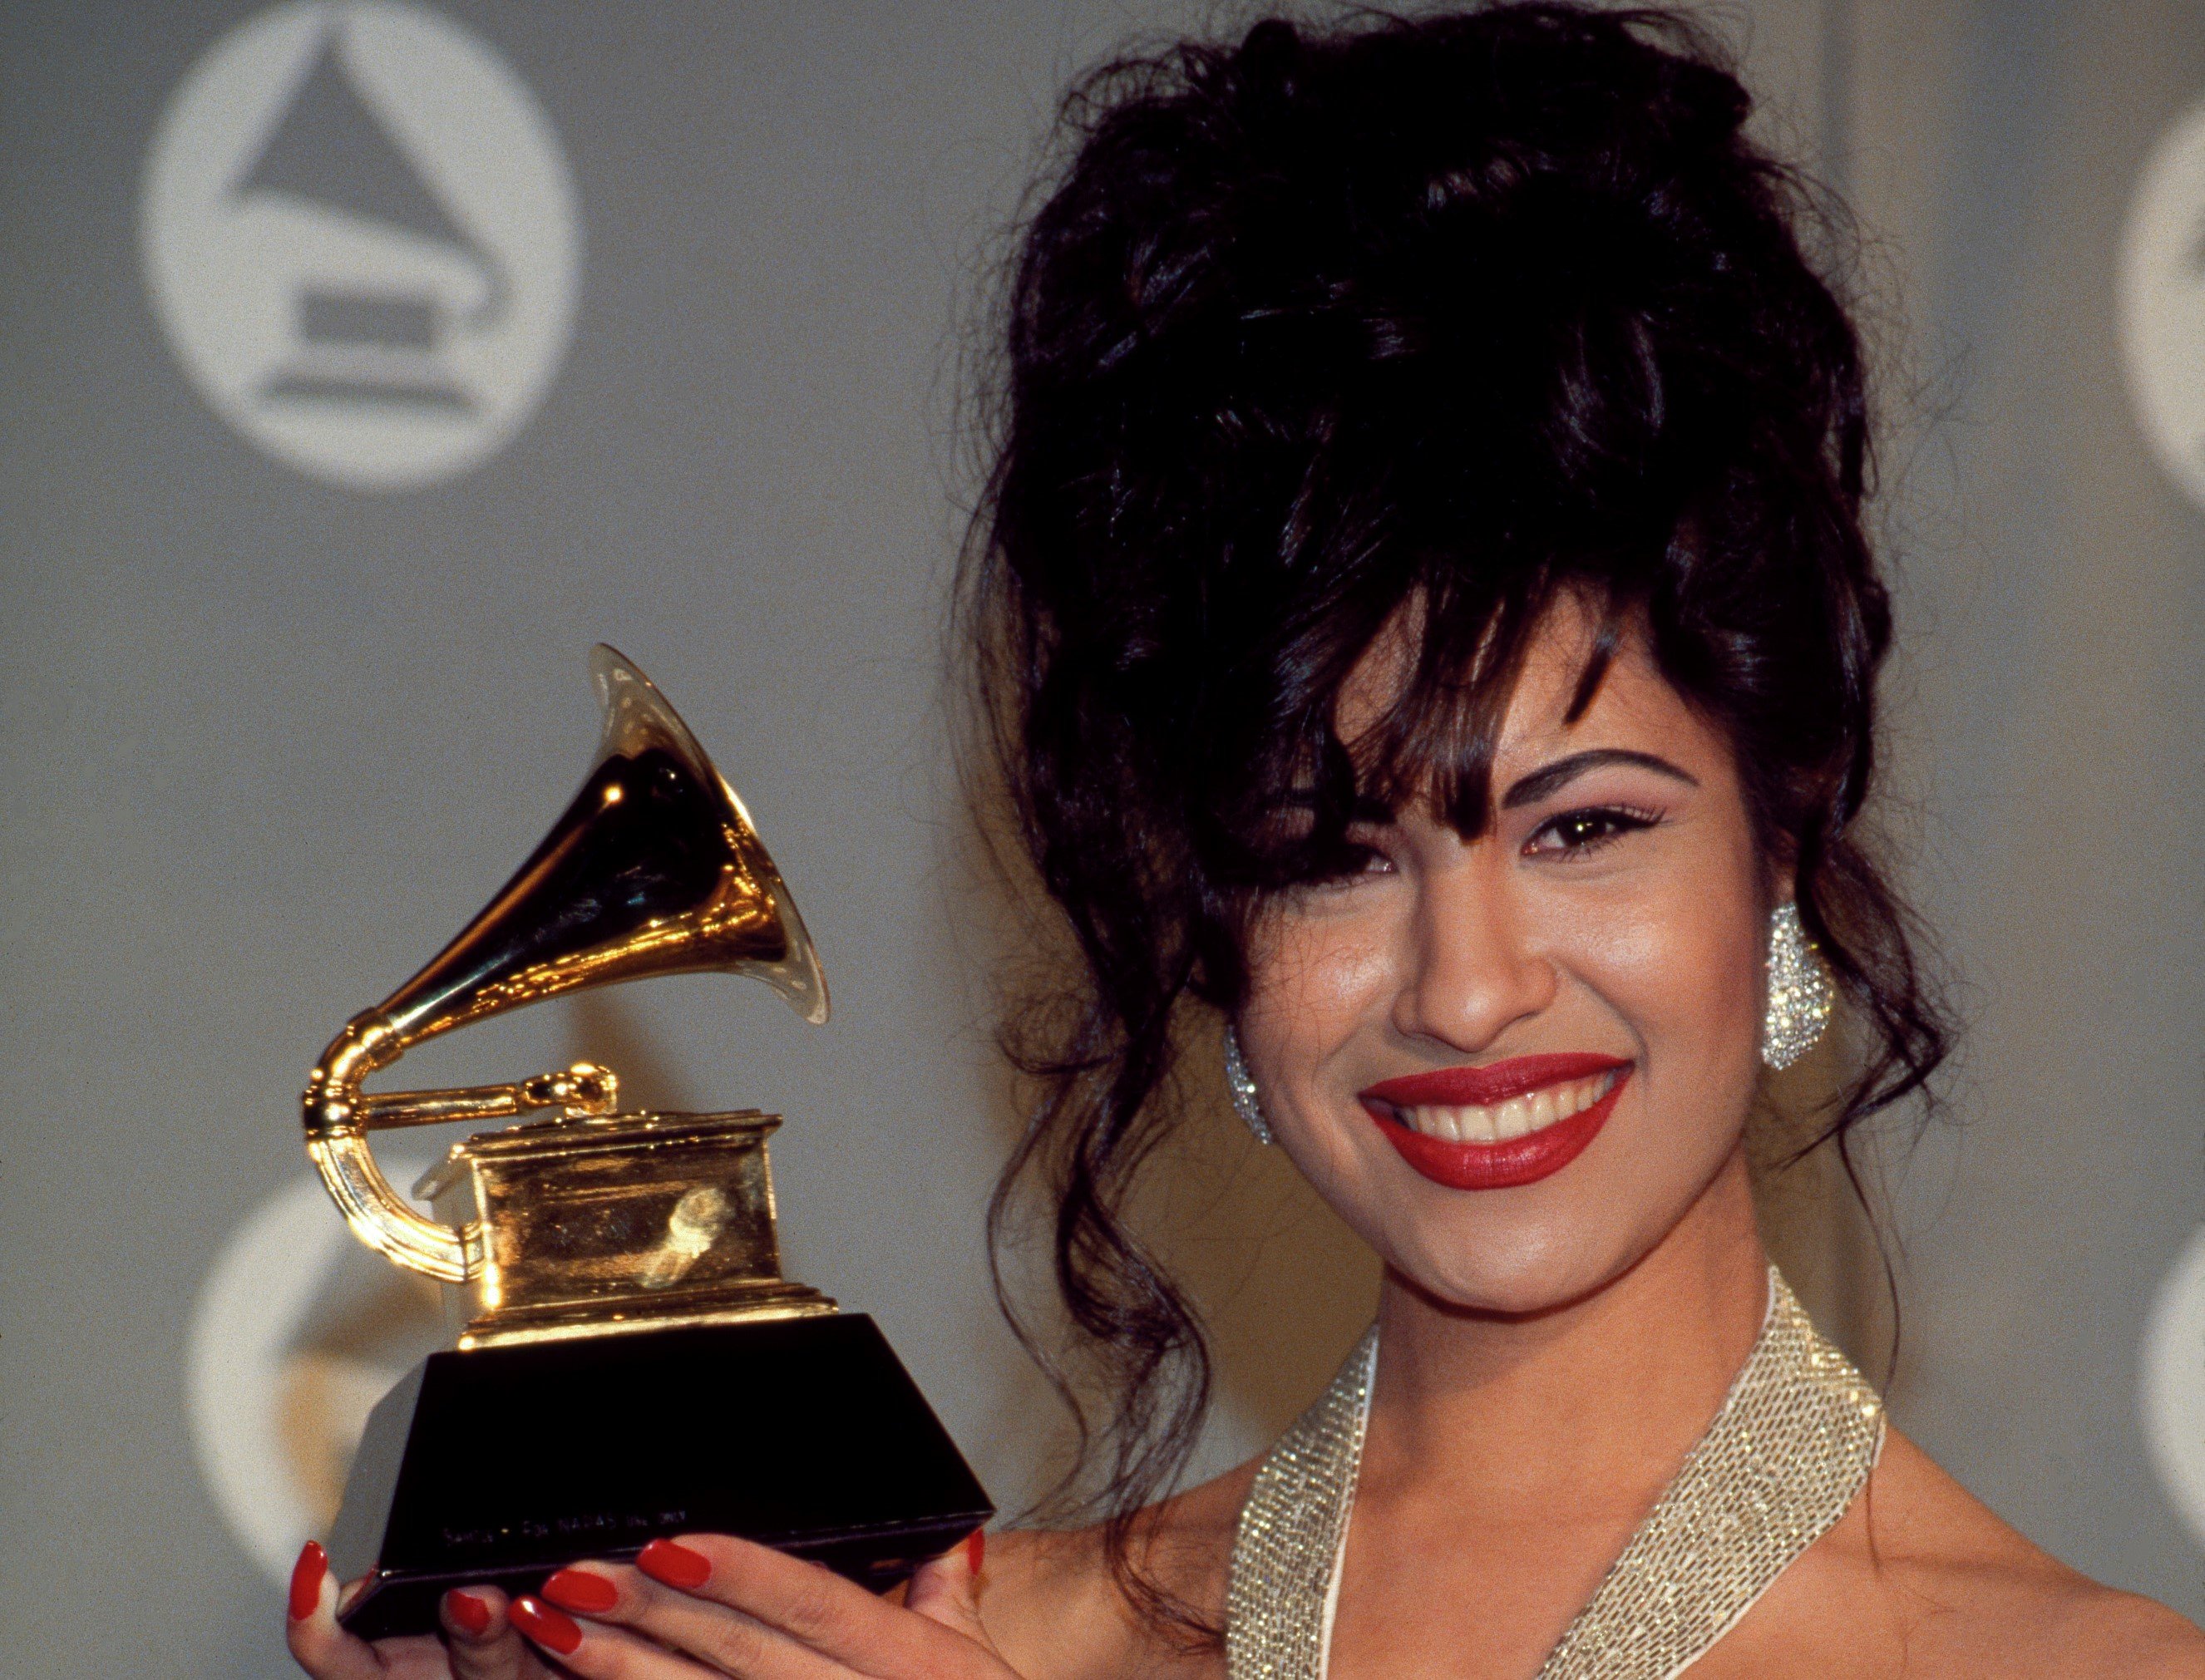 Singer Selena Quintanilla holding the Grammy Award she won in 1994